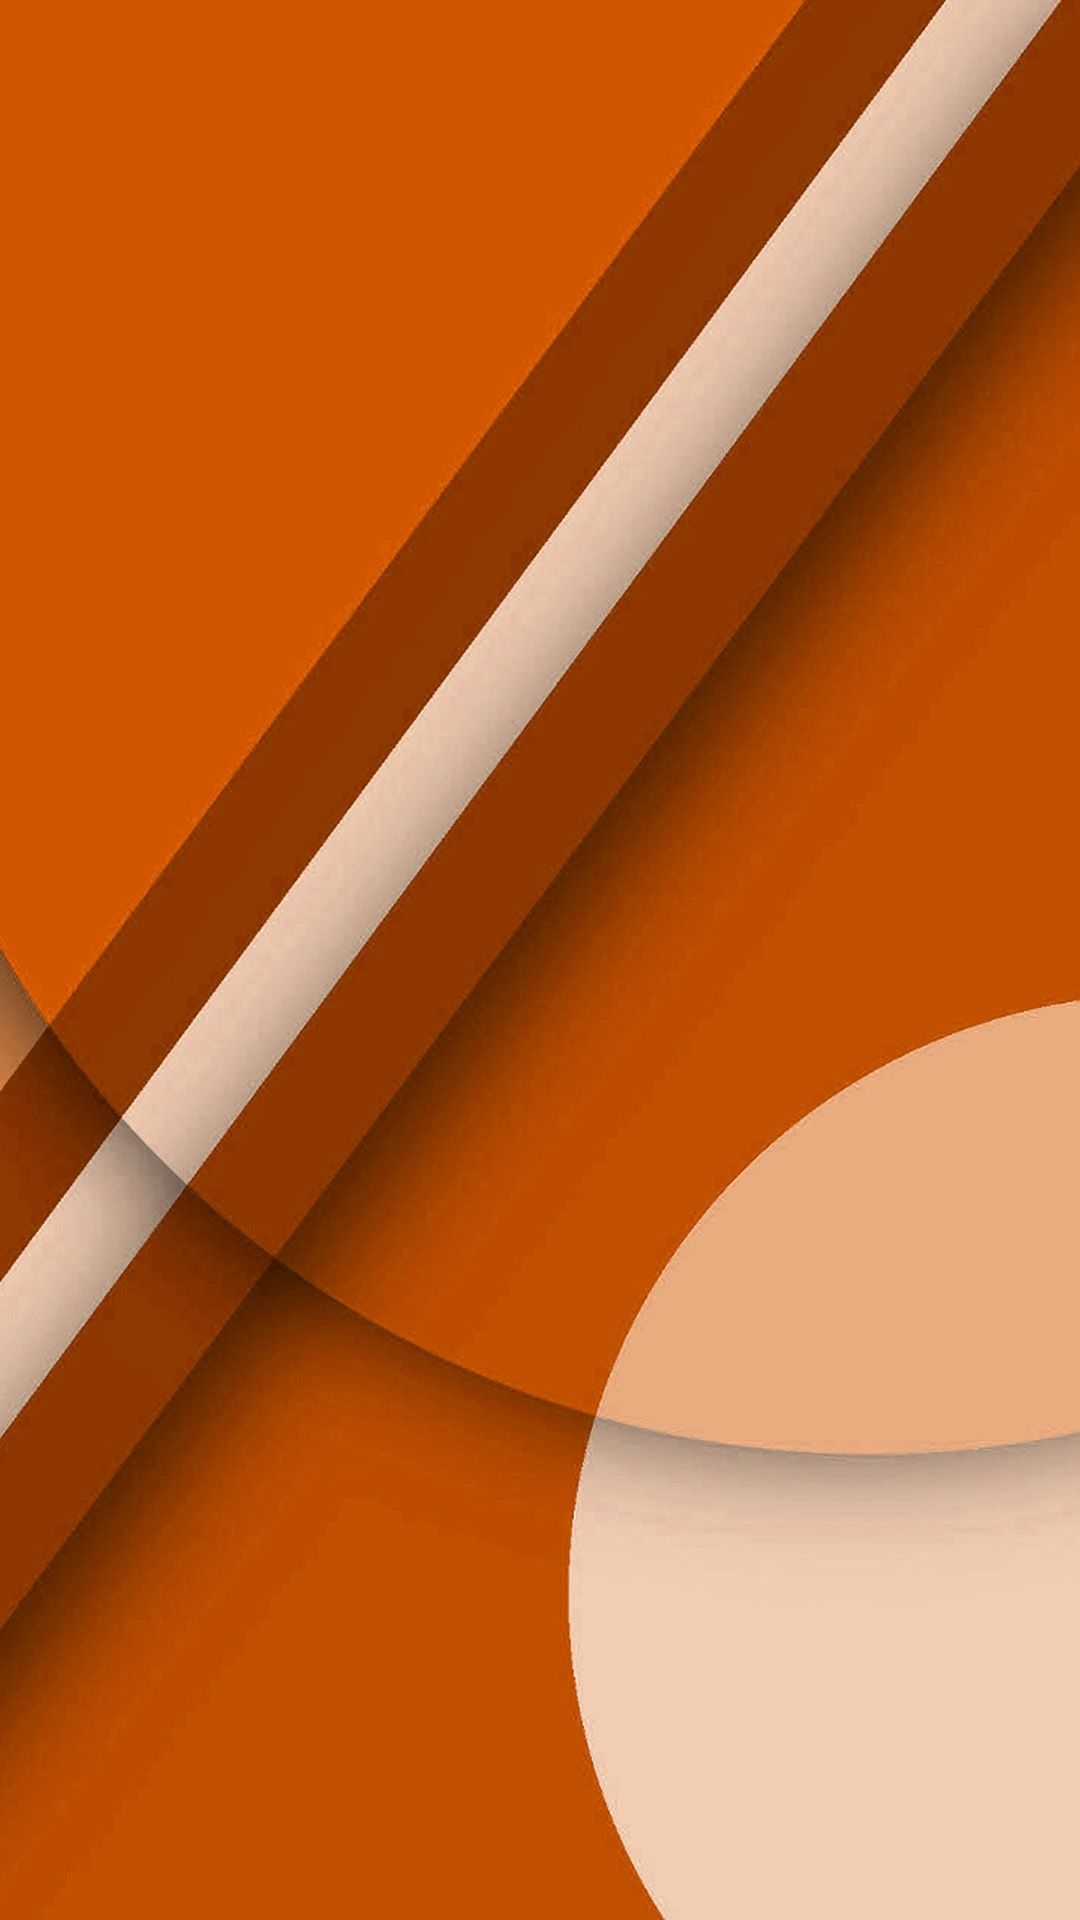 Free download Beautiful orange geometric iphone 6 plus wallpaper